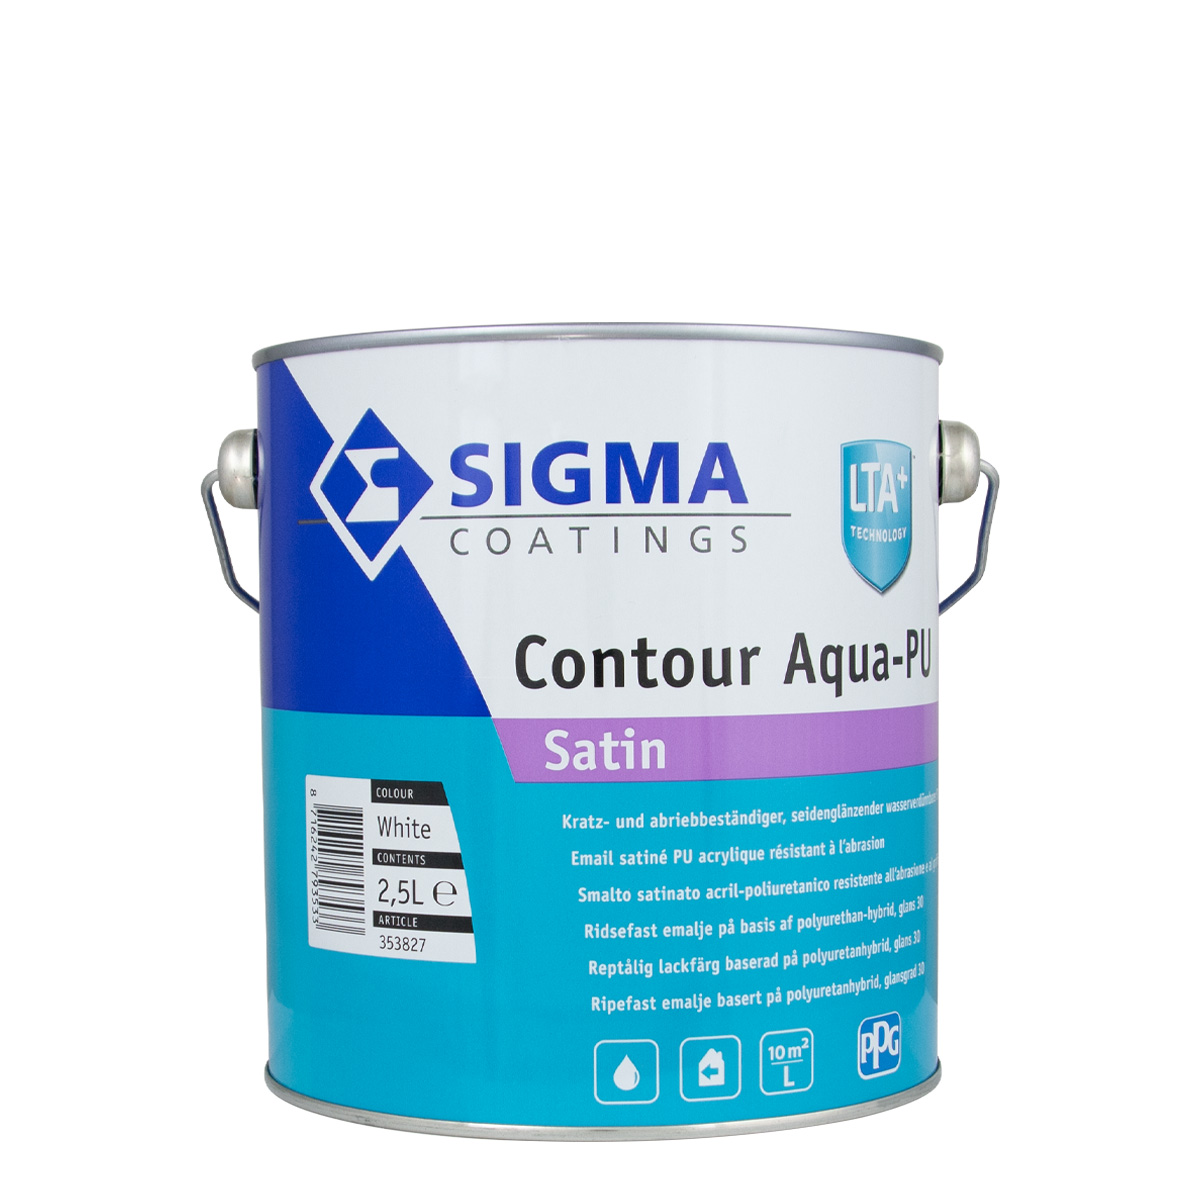 Sigma_Contour_Aqua_PU_Satin_2,5l_gross